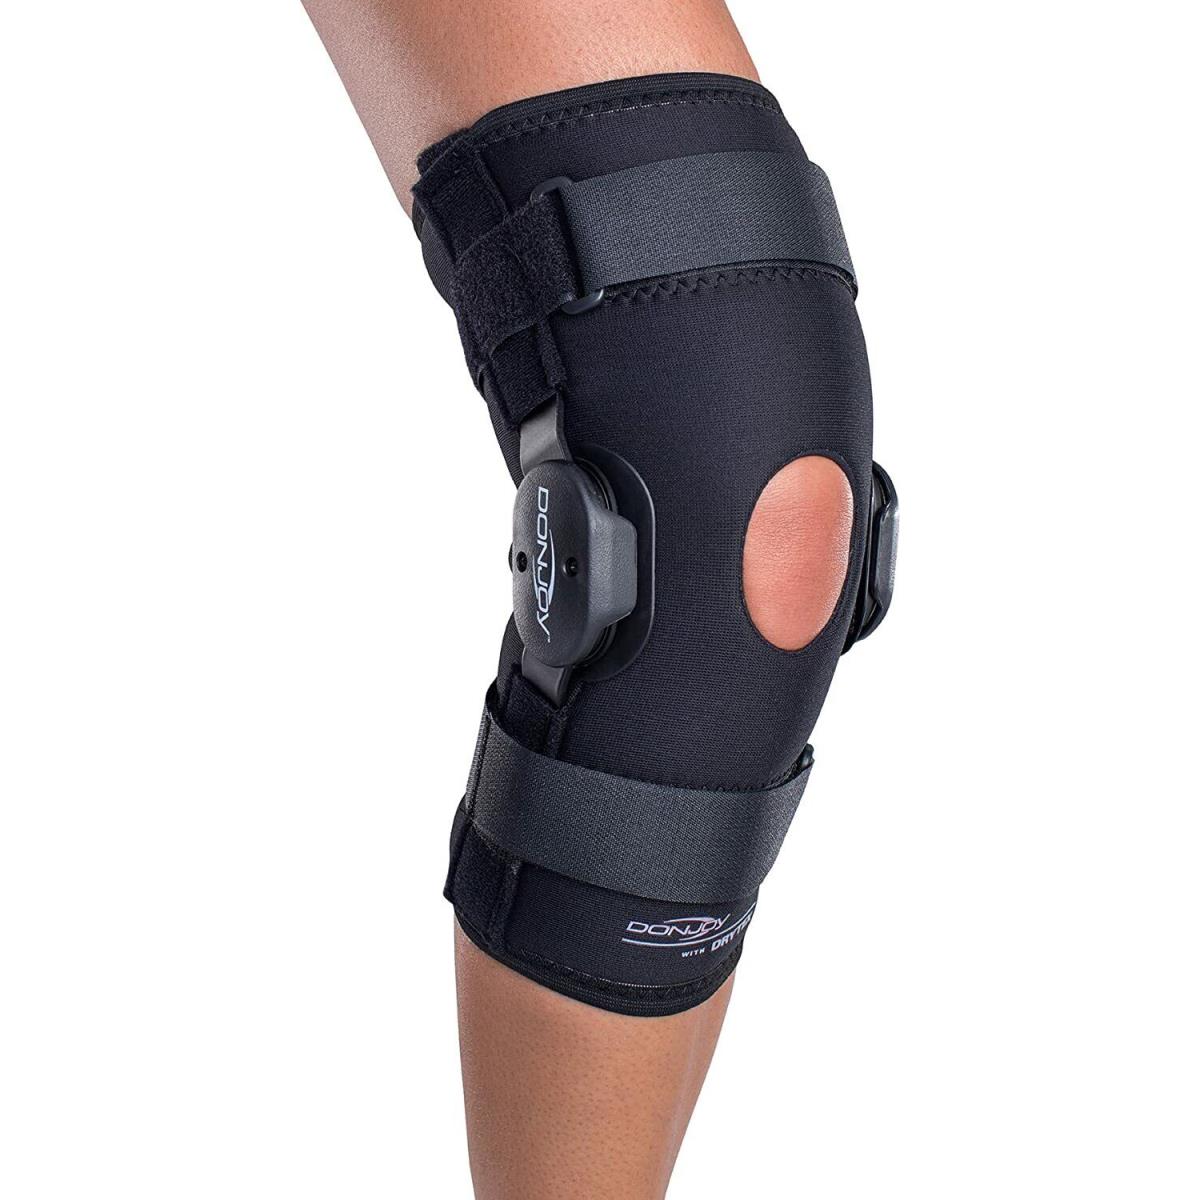 Donjoy Deluxe Hinged Knee Brace Drytex Sleeve Open Popliteal Size Small